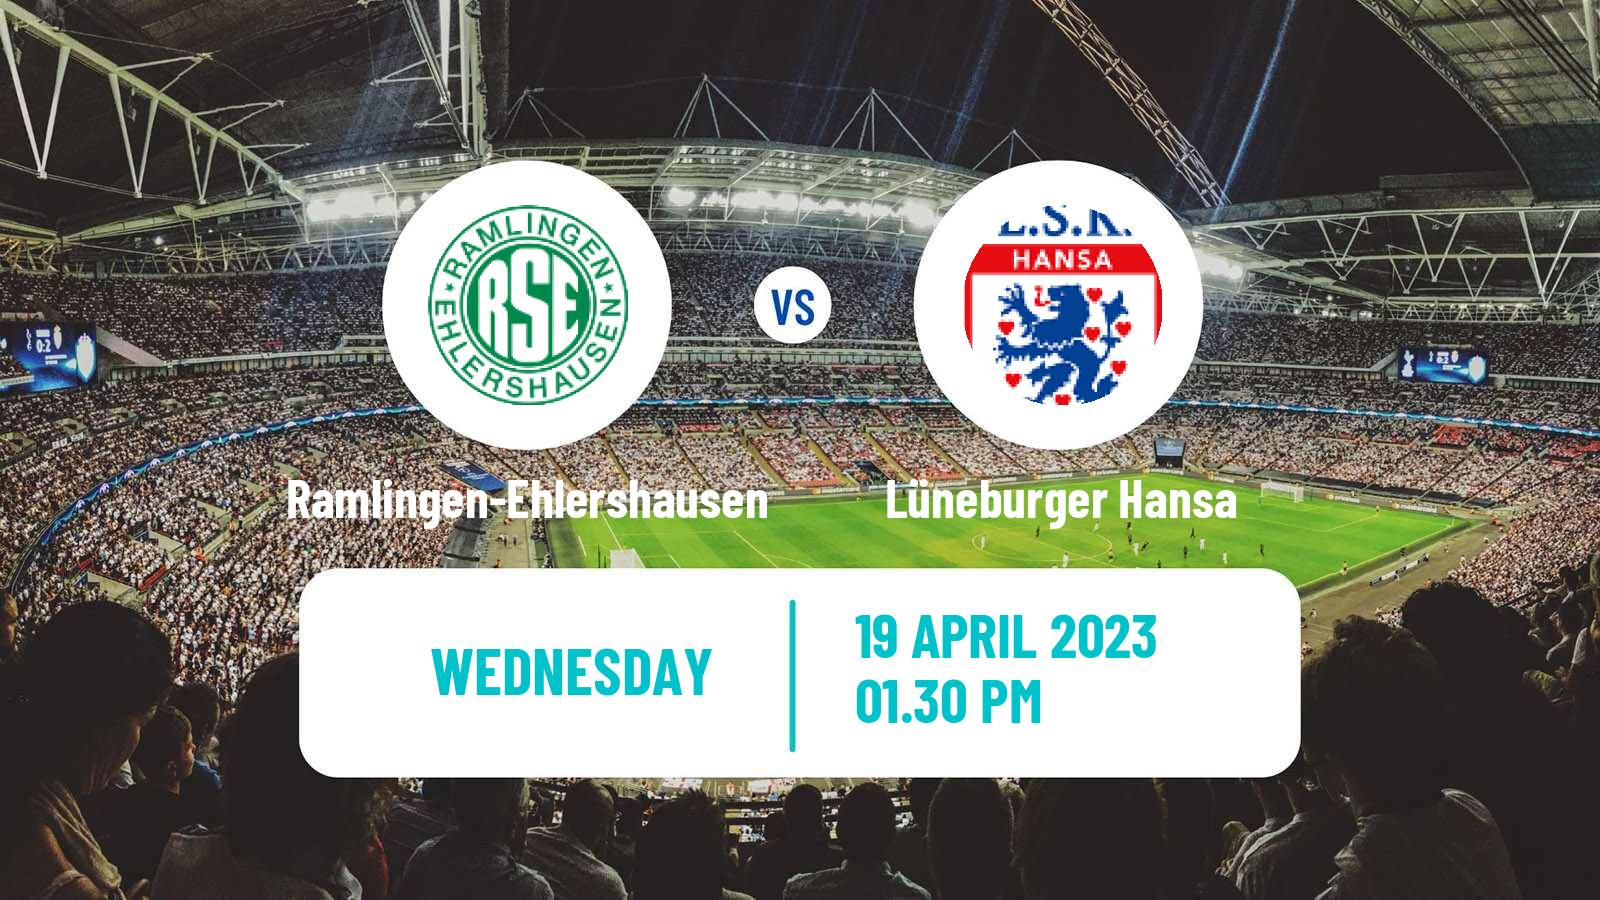 Soccer German Oberliga Niedersachsen Ramlingen-Ehlershausen - Lüneburger Hansa